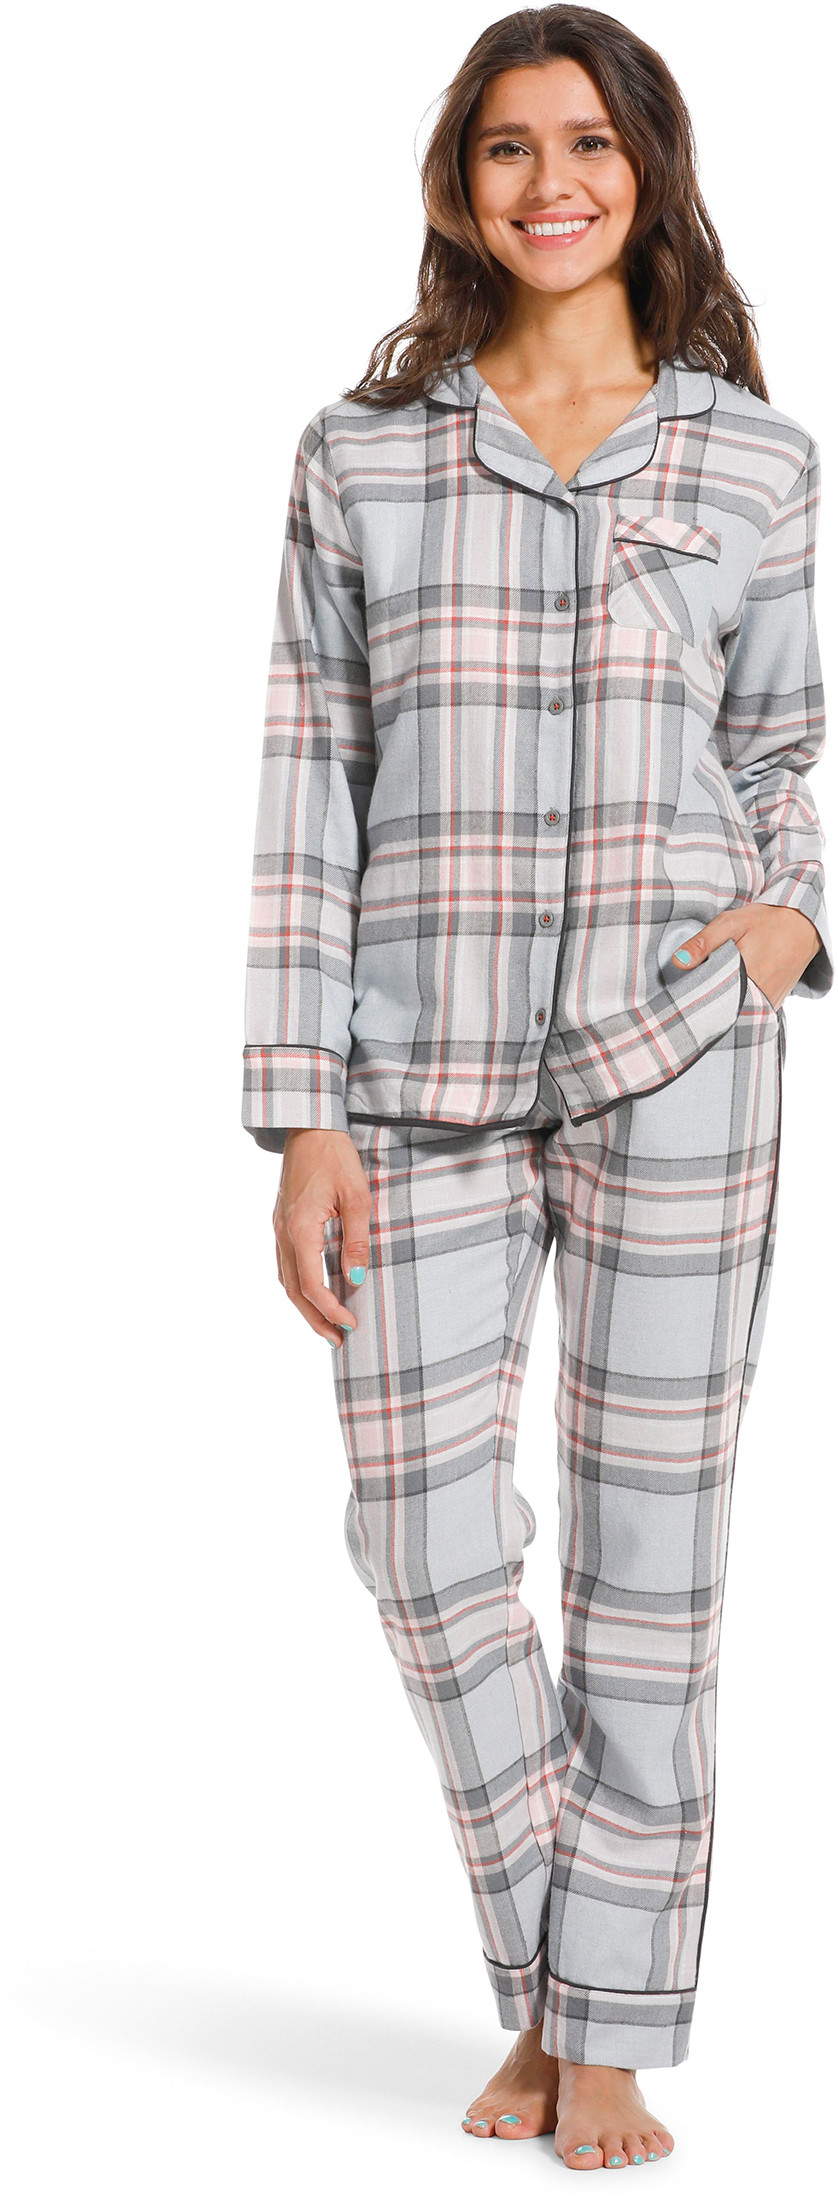 Rebelle dames pyjama flanel 21222-458-6-48